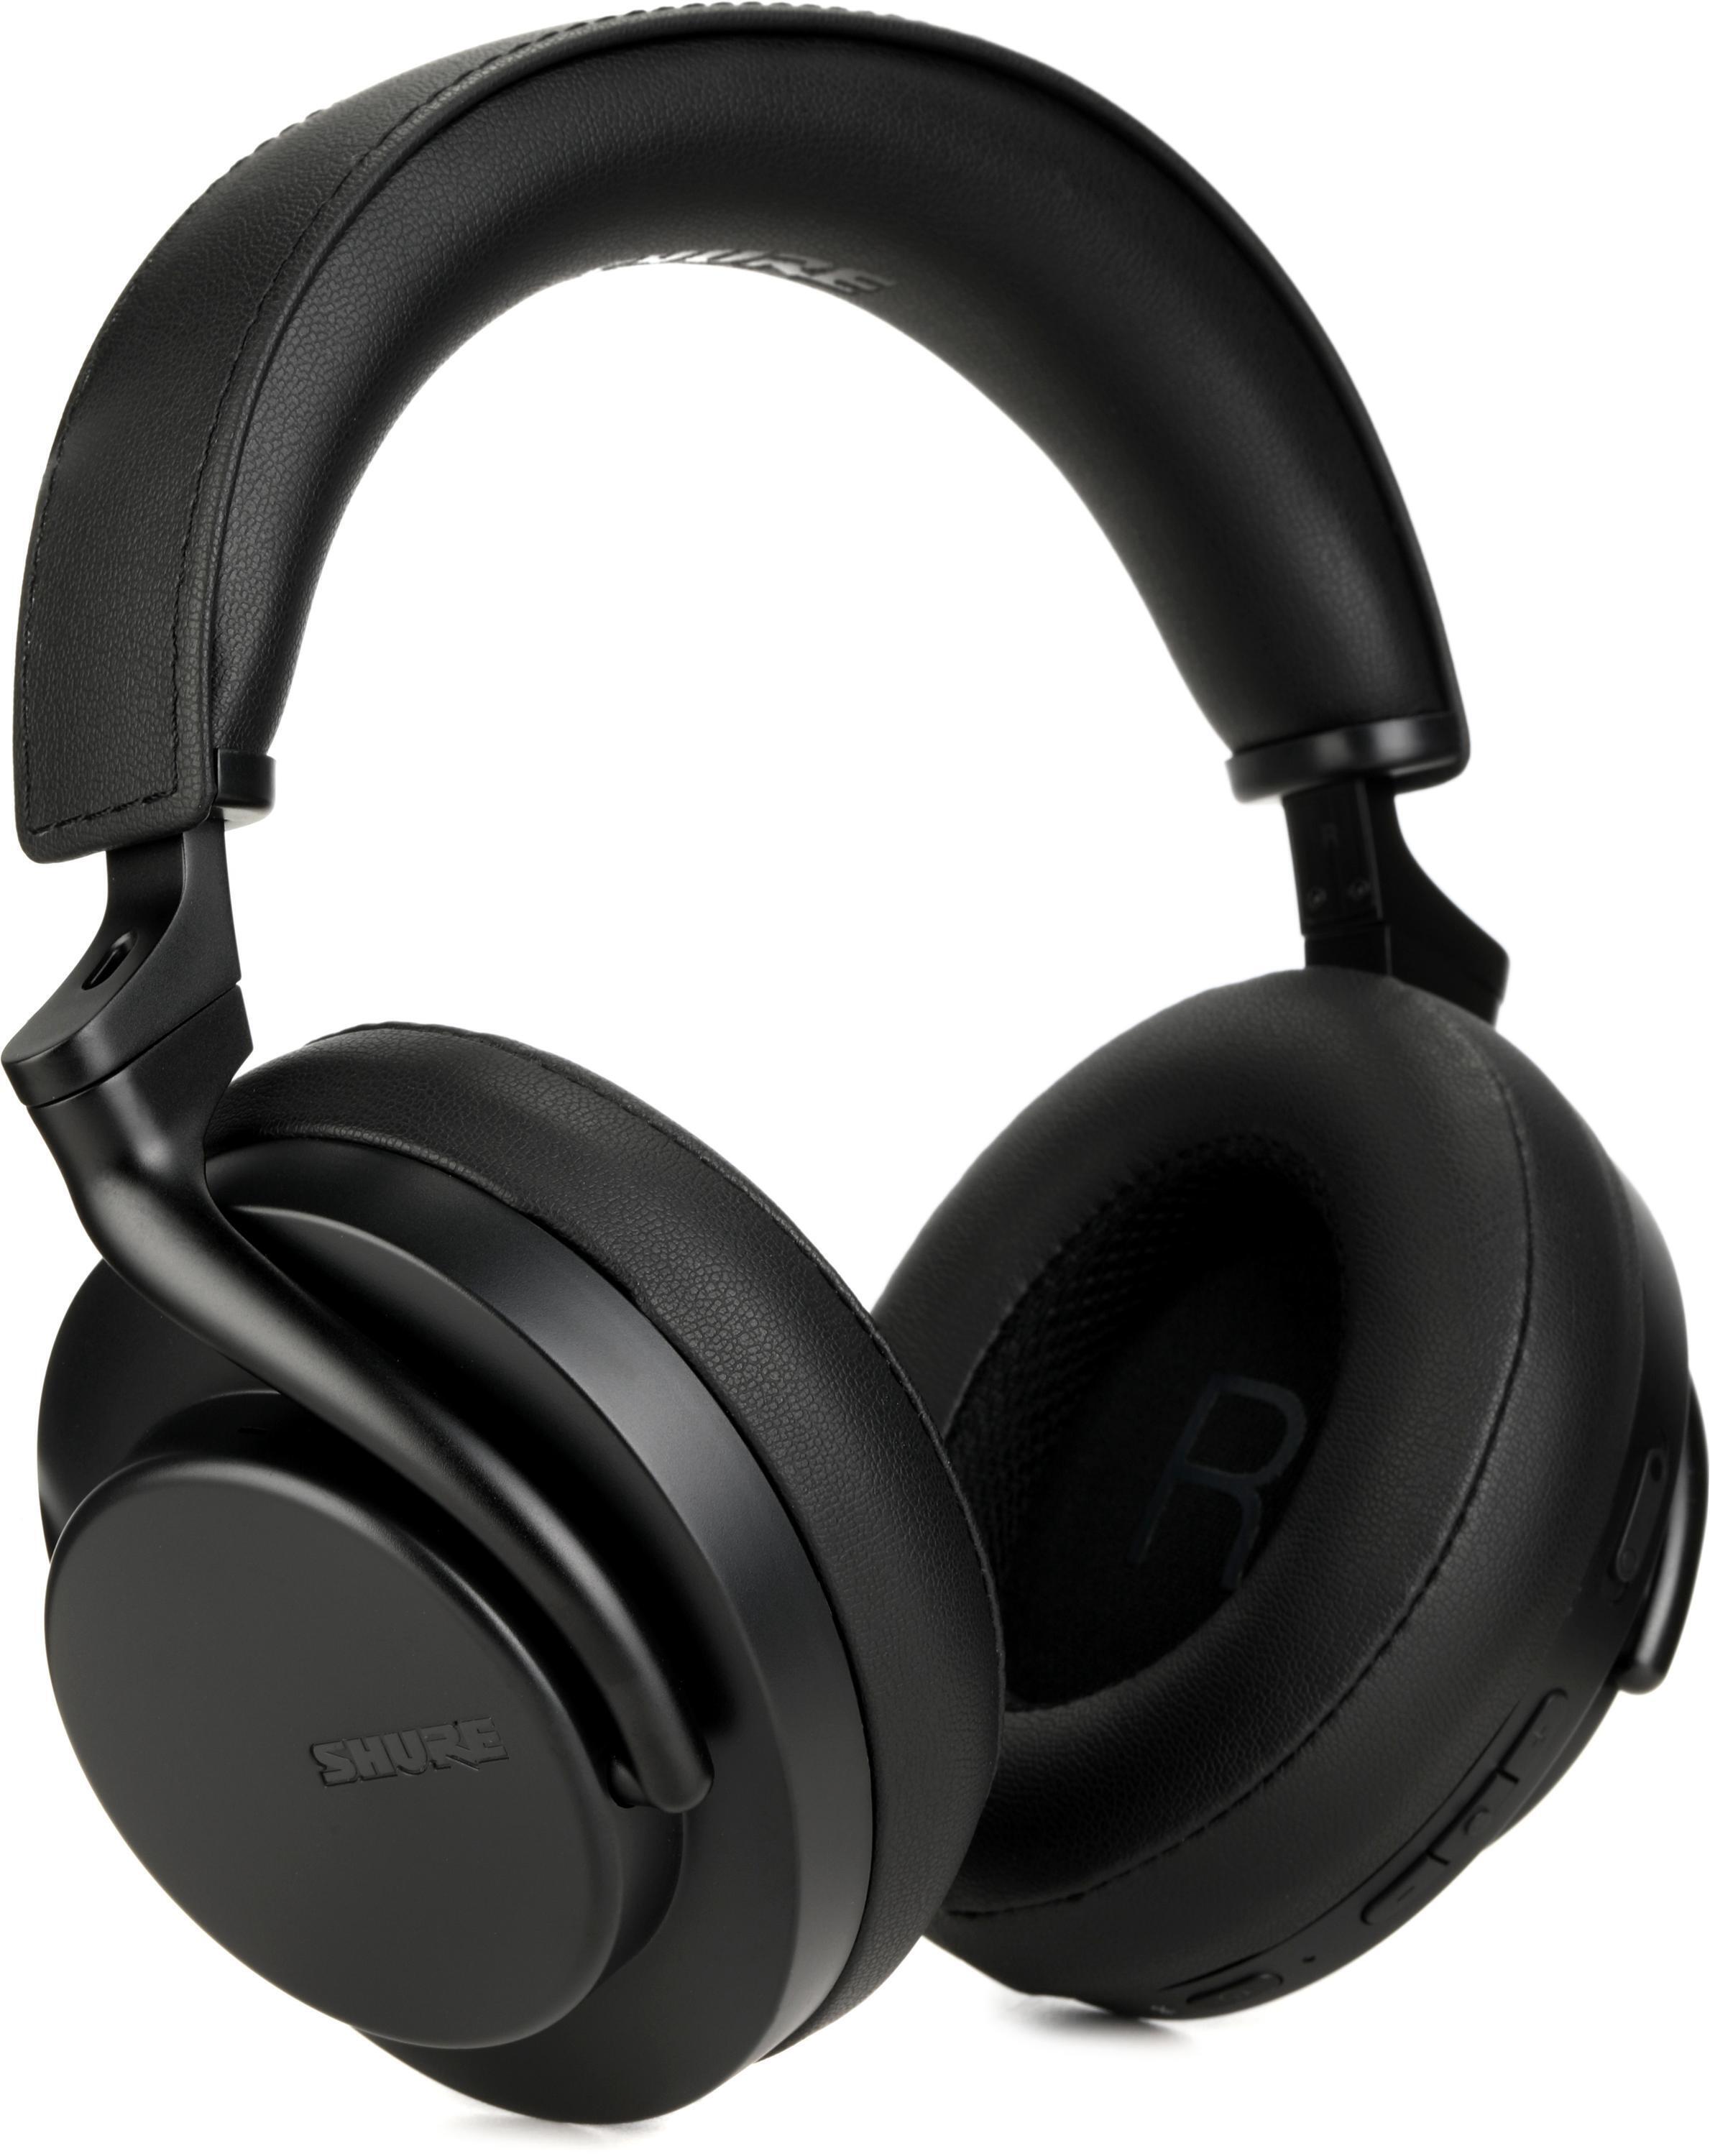 Shure AONIC 50 Gen 2 Wireless Bluetooth Noise-canceling Headphones - Black